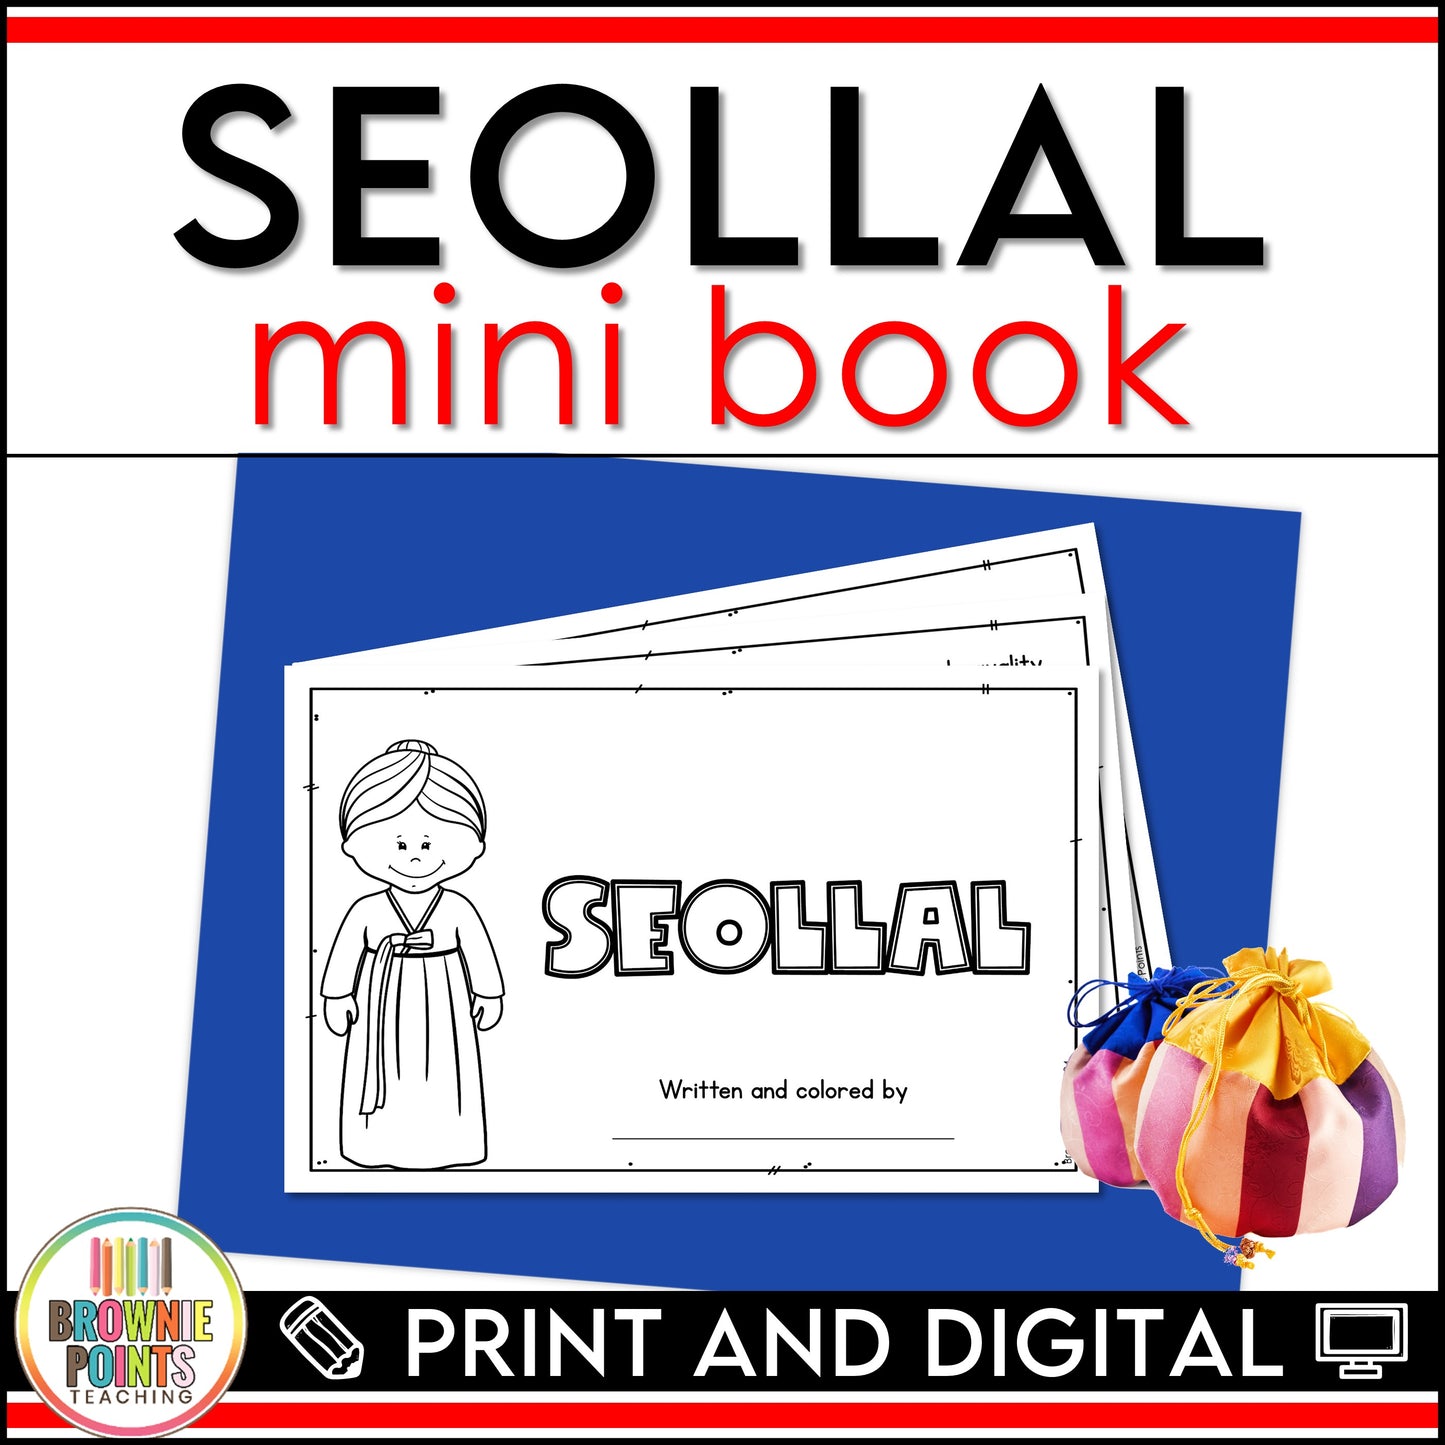 Seollal - Korean New Year Mini Book